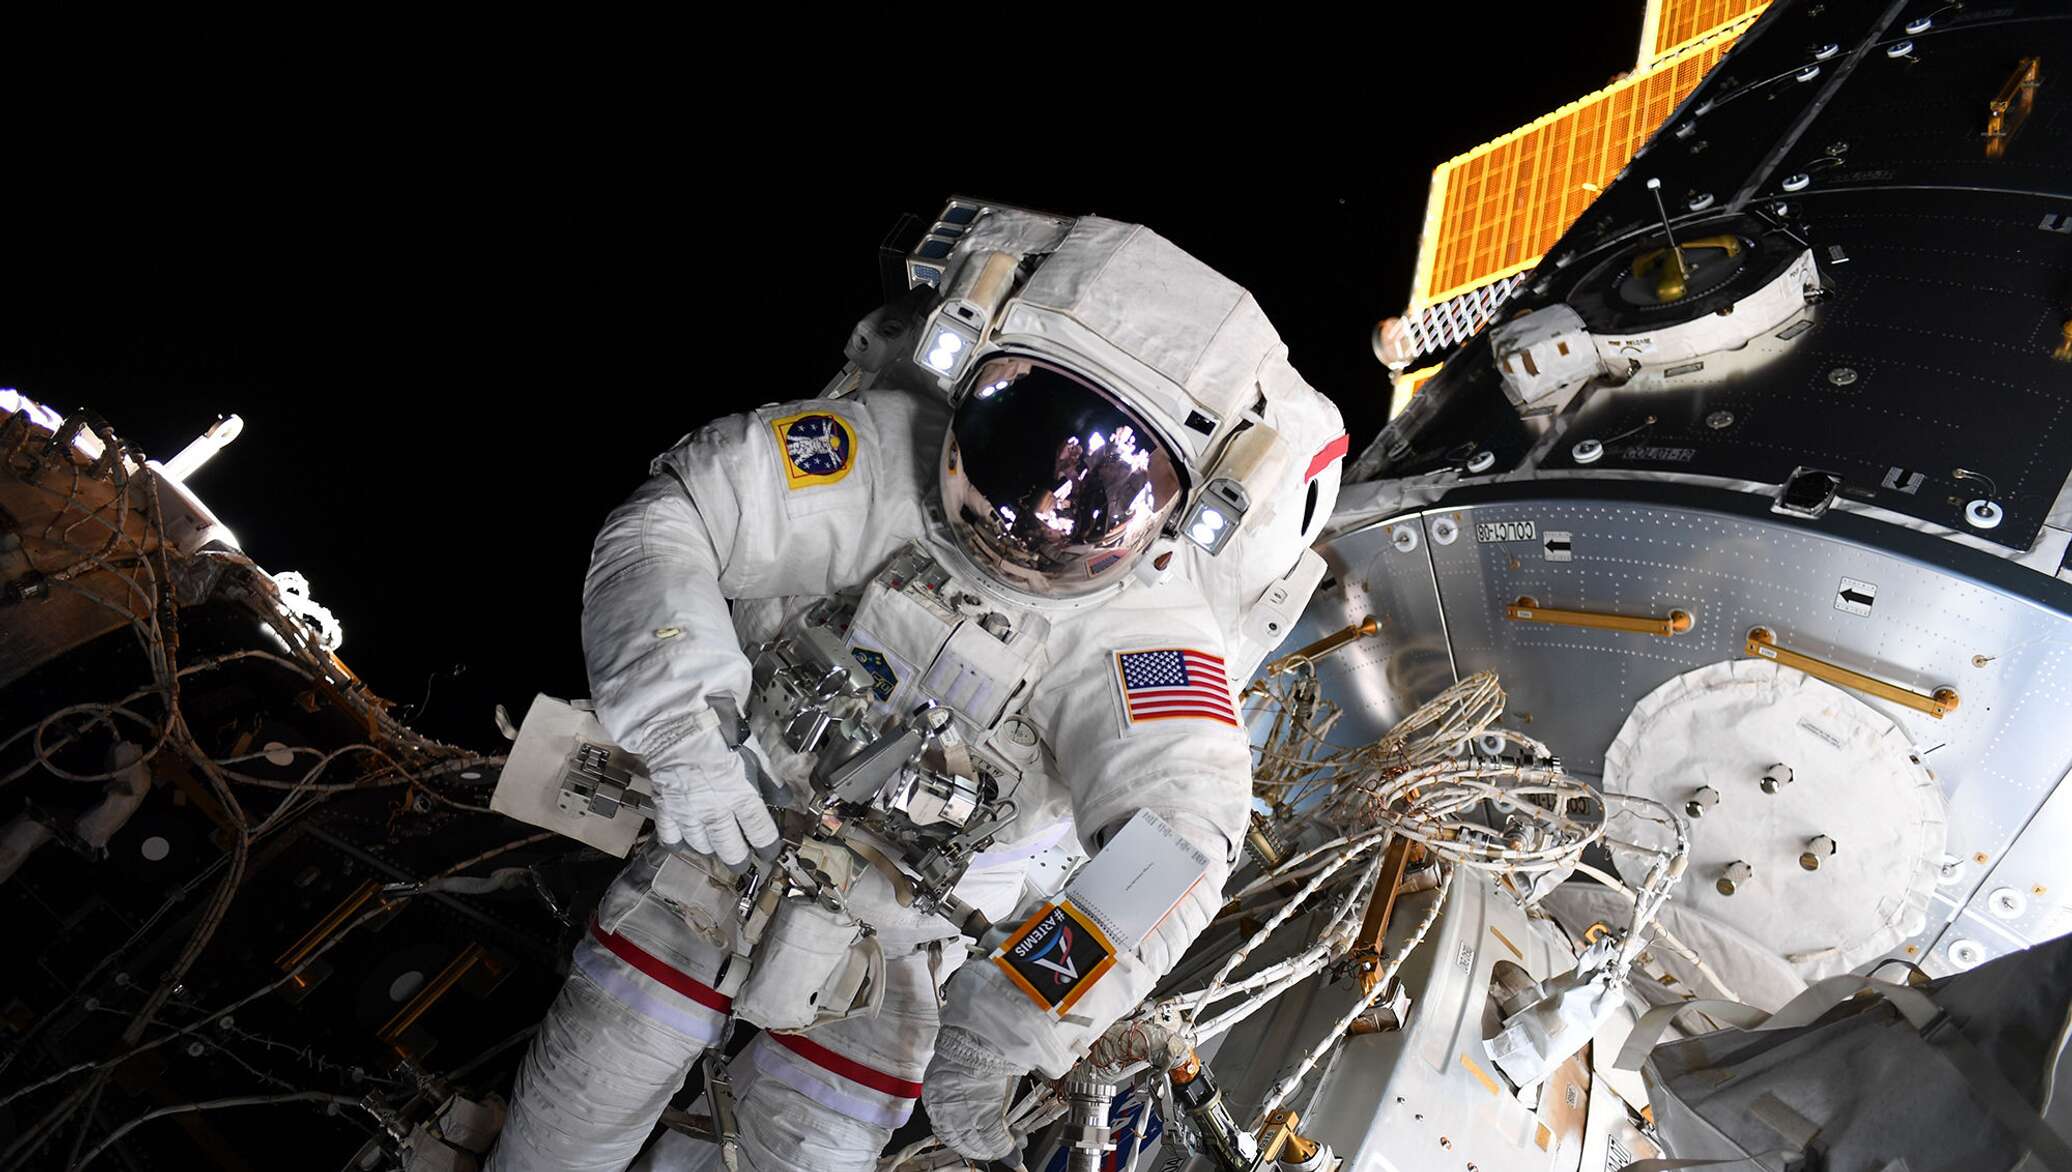 Нов наса. Скафандры НАСА на МКС. Космонавт НАСА В открытом космосе. Скафандр МКС США. Астронавты НАСА В космосе.